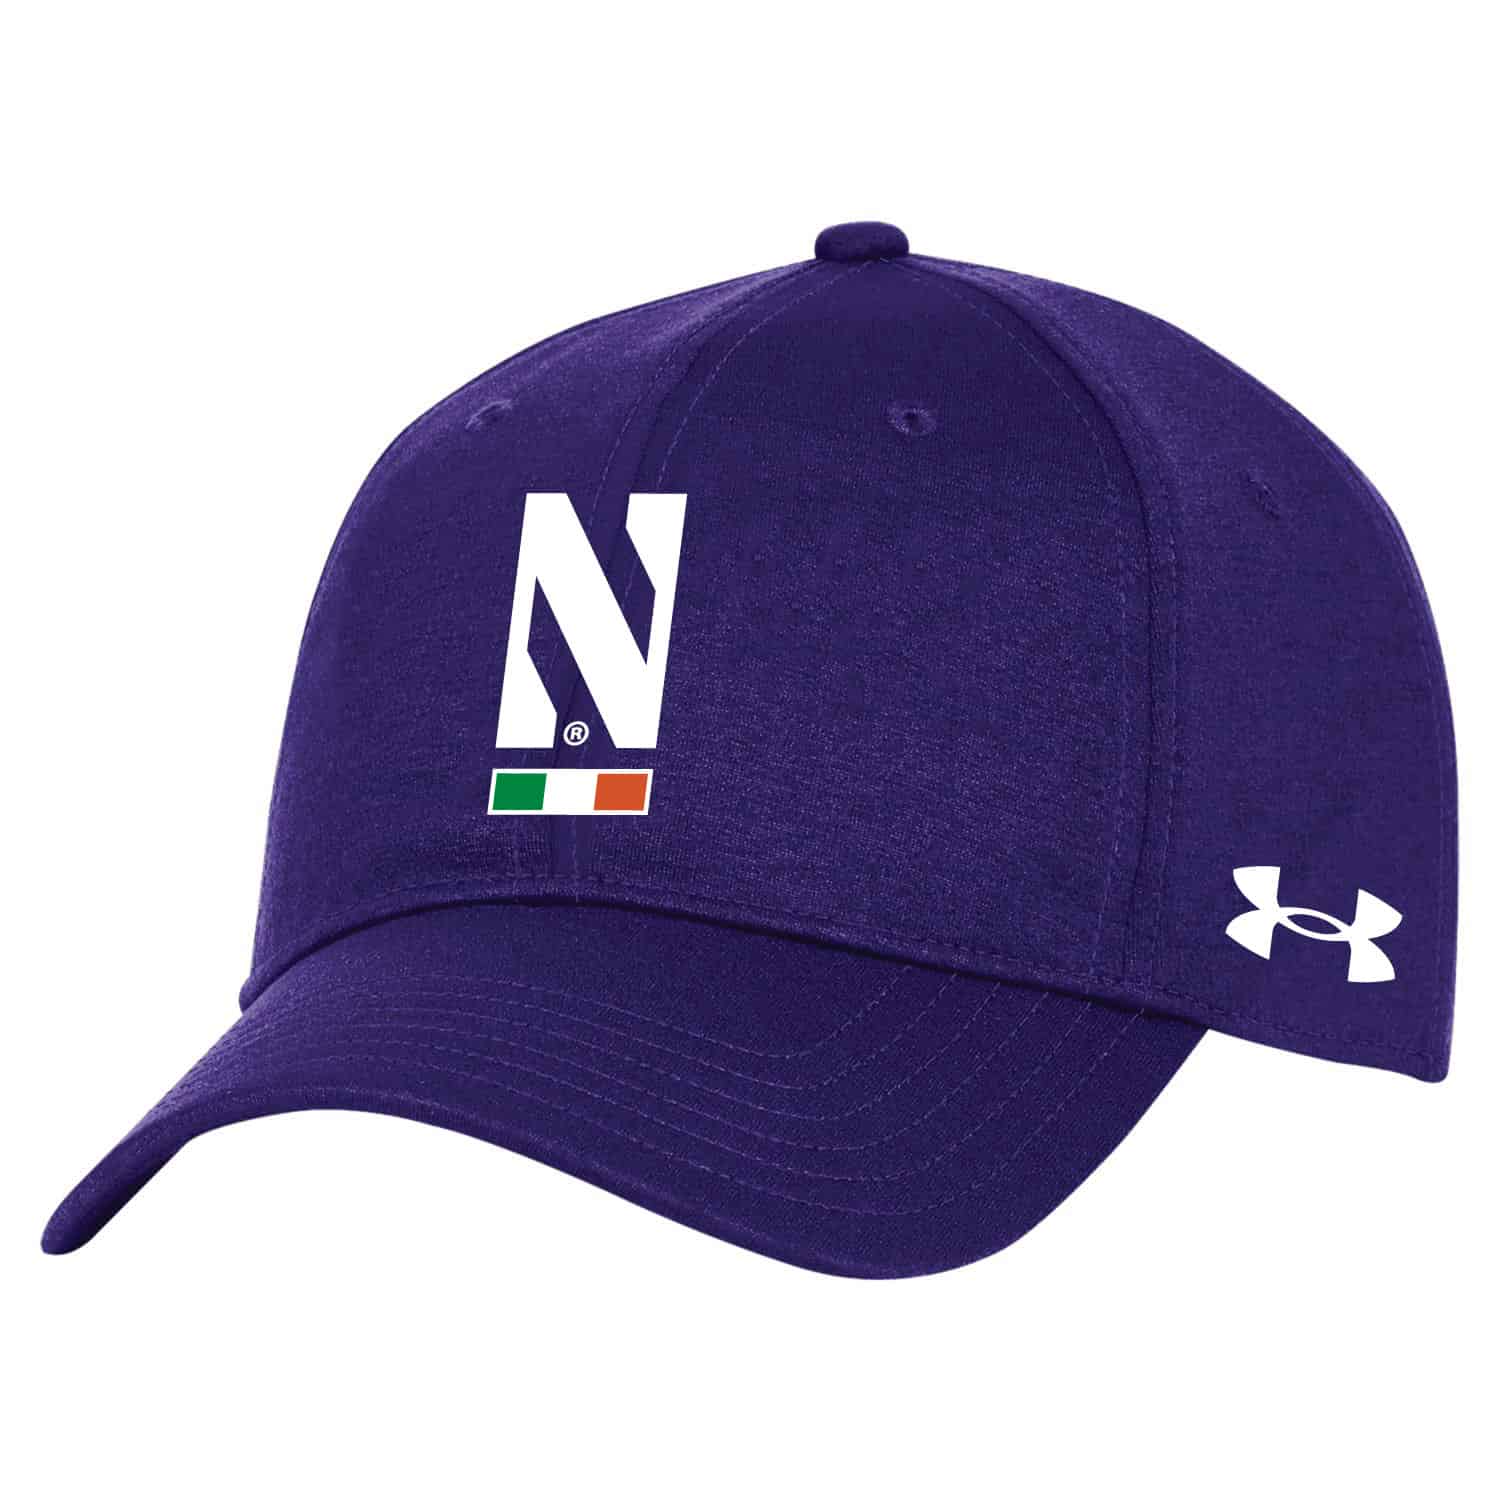 Northwestern University Wildcats Under Armour Adjustable Purple Hat with  Stylized Northwestern N & The Irish Flag